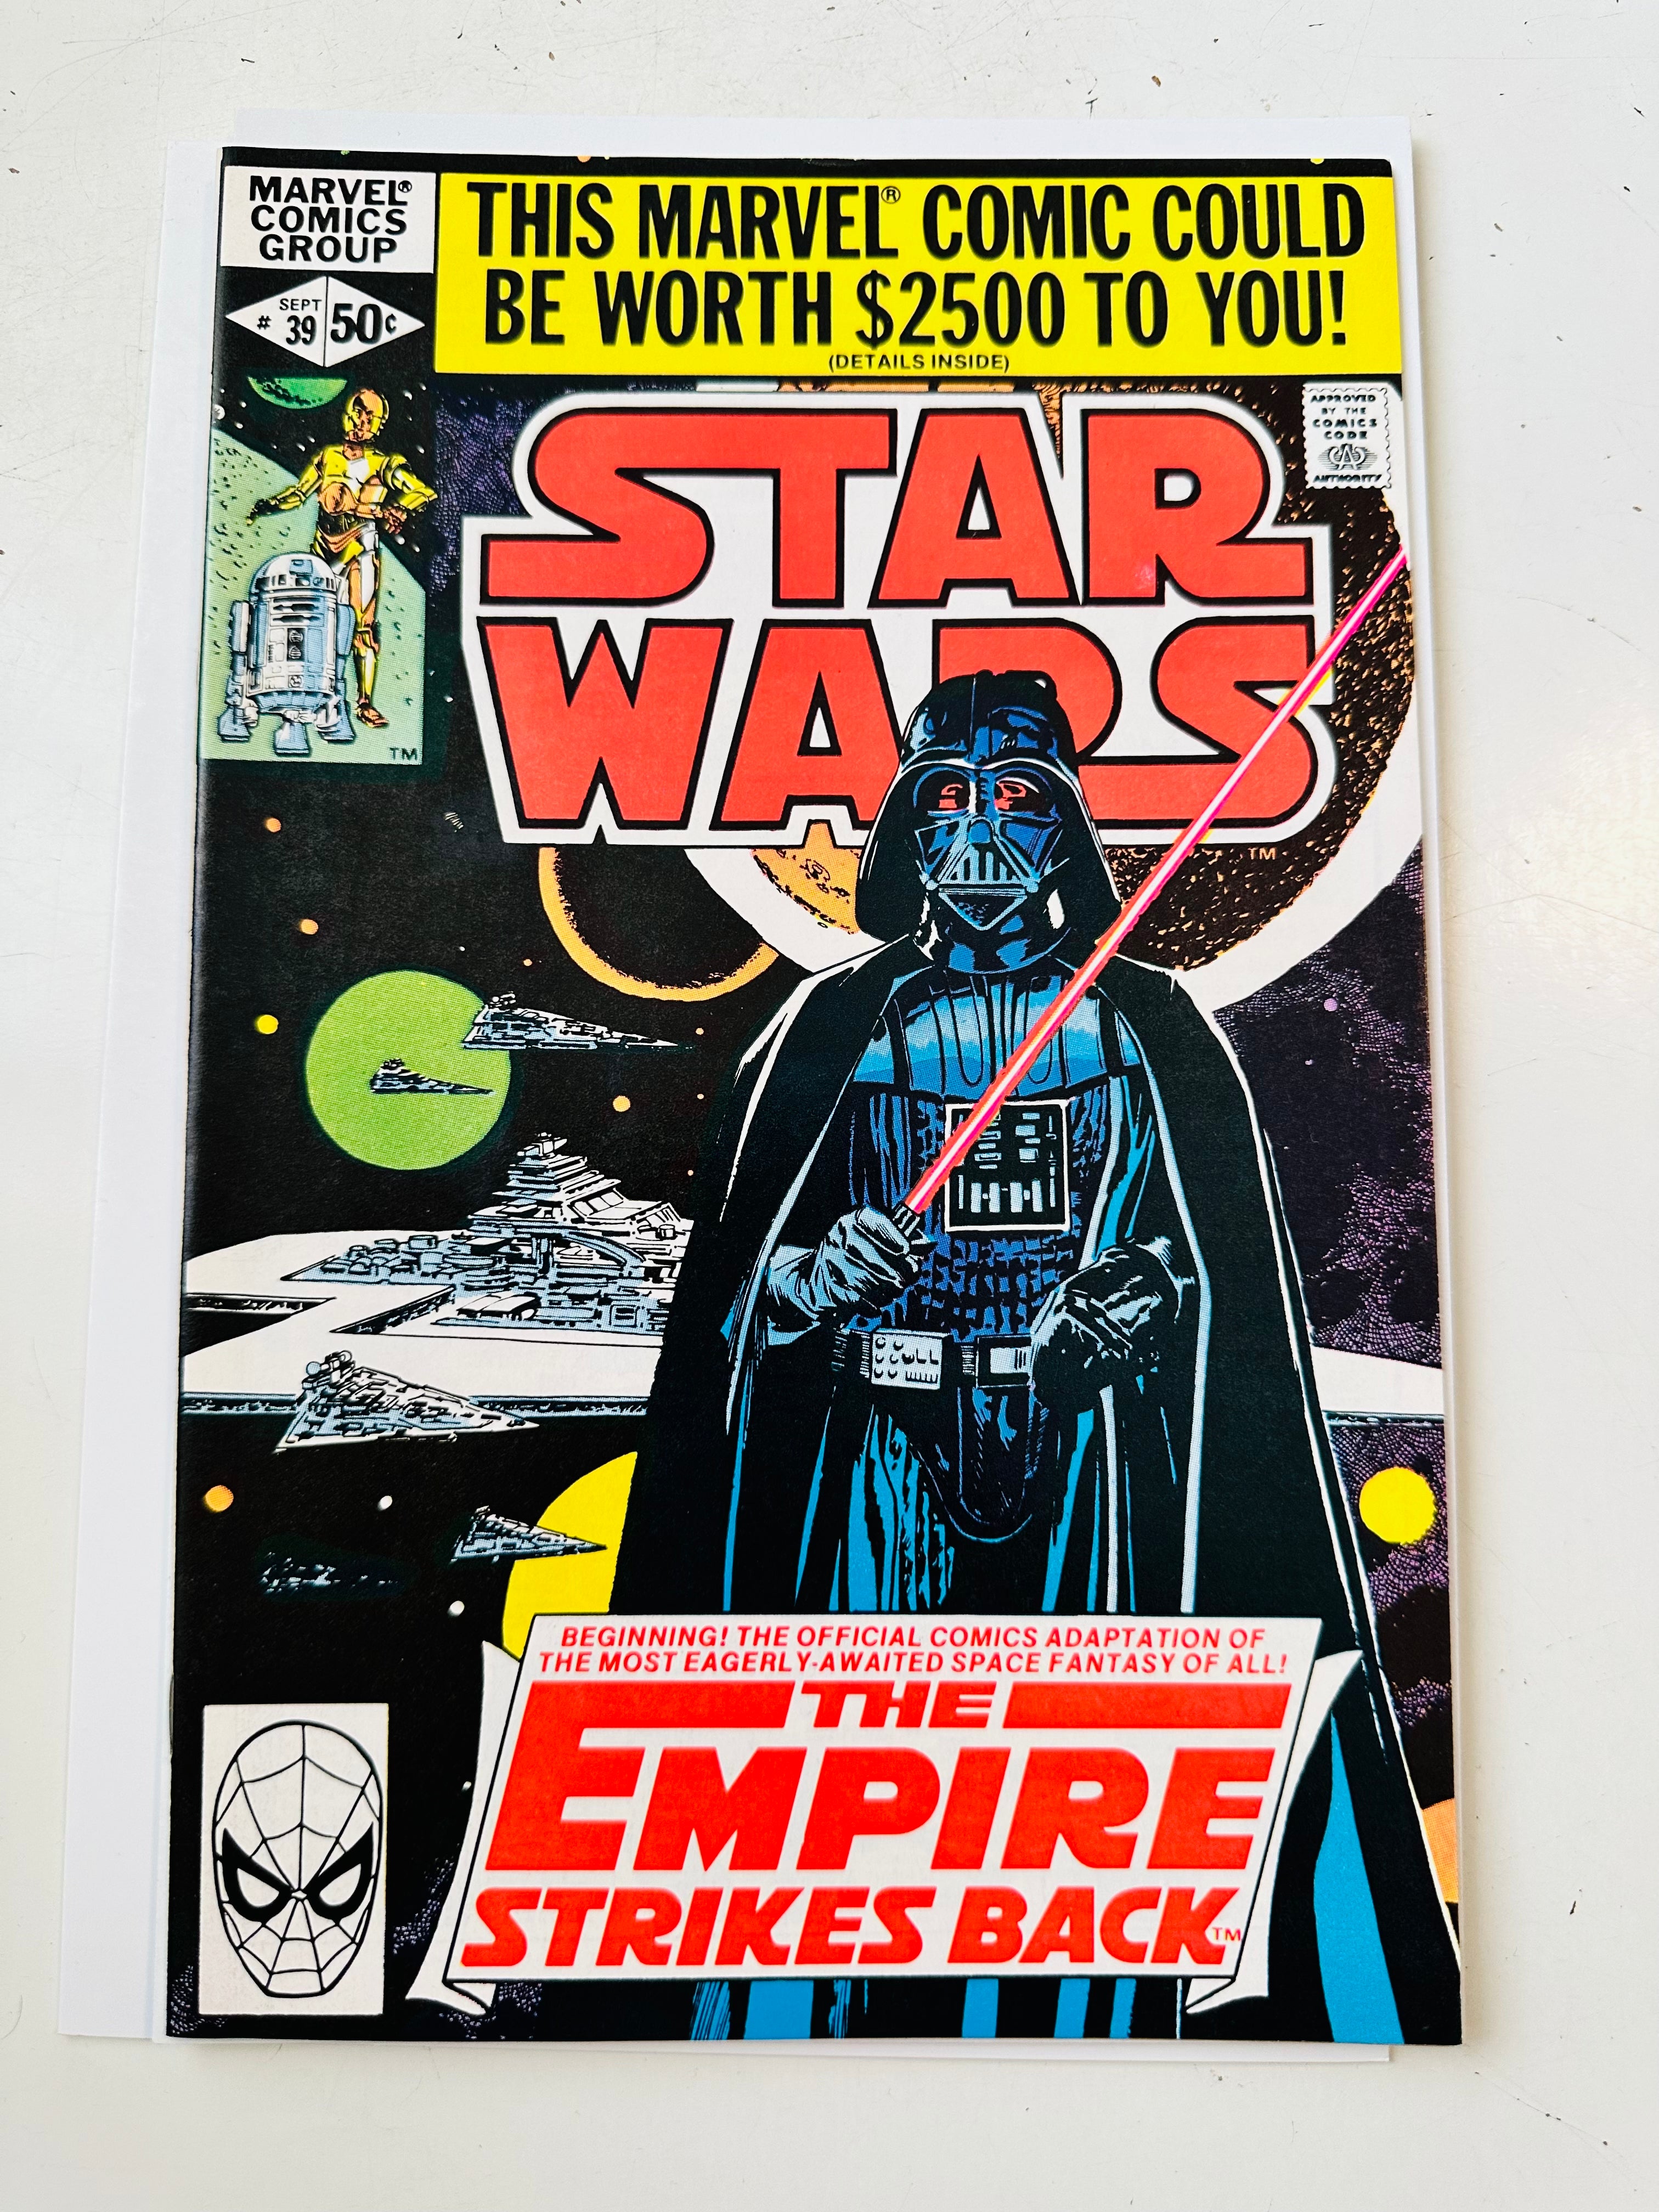 Star Wars #39 high grade comic book 1980.